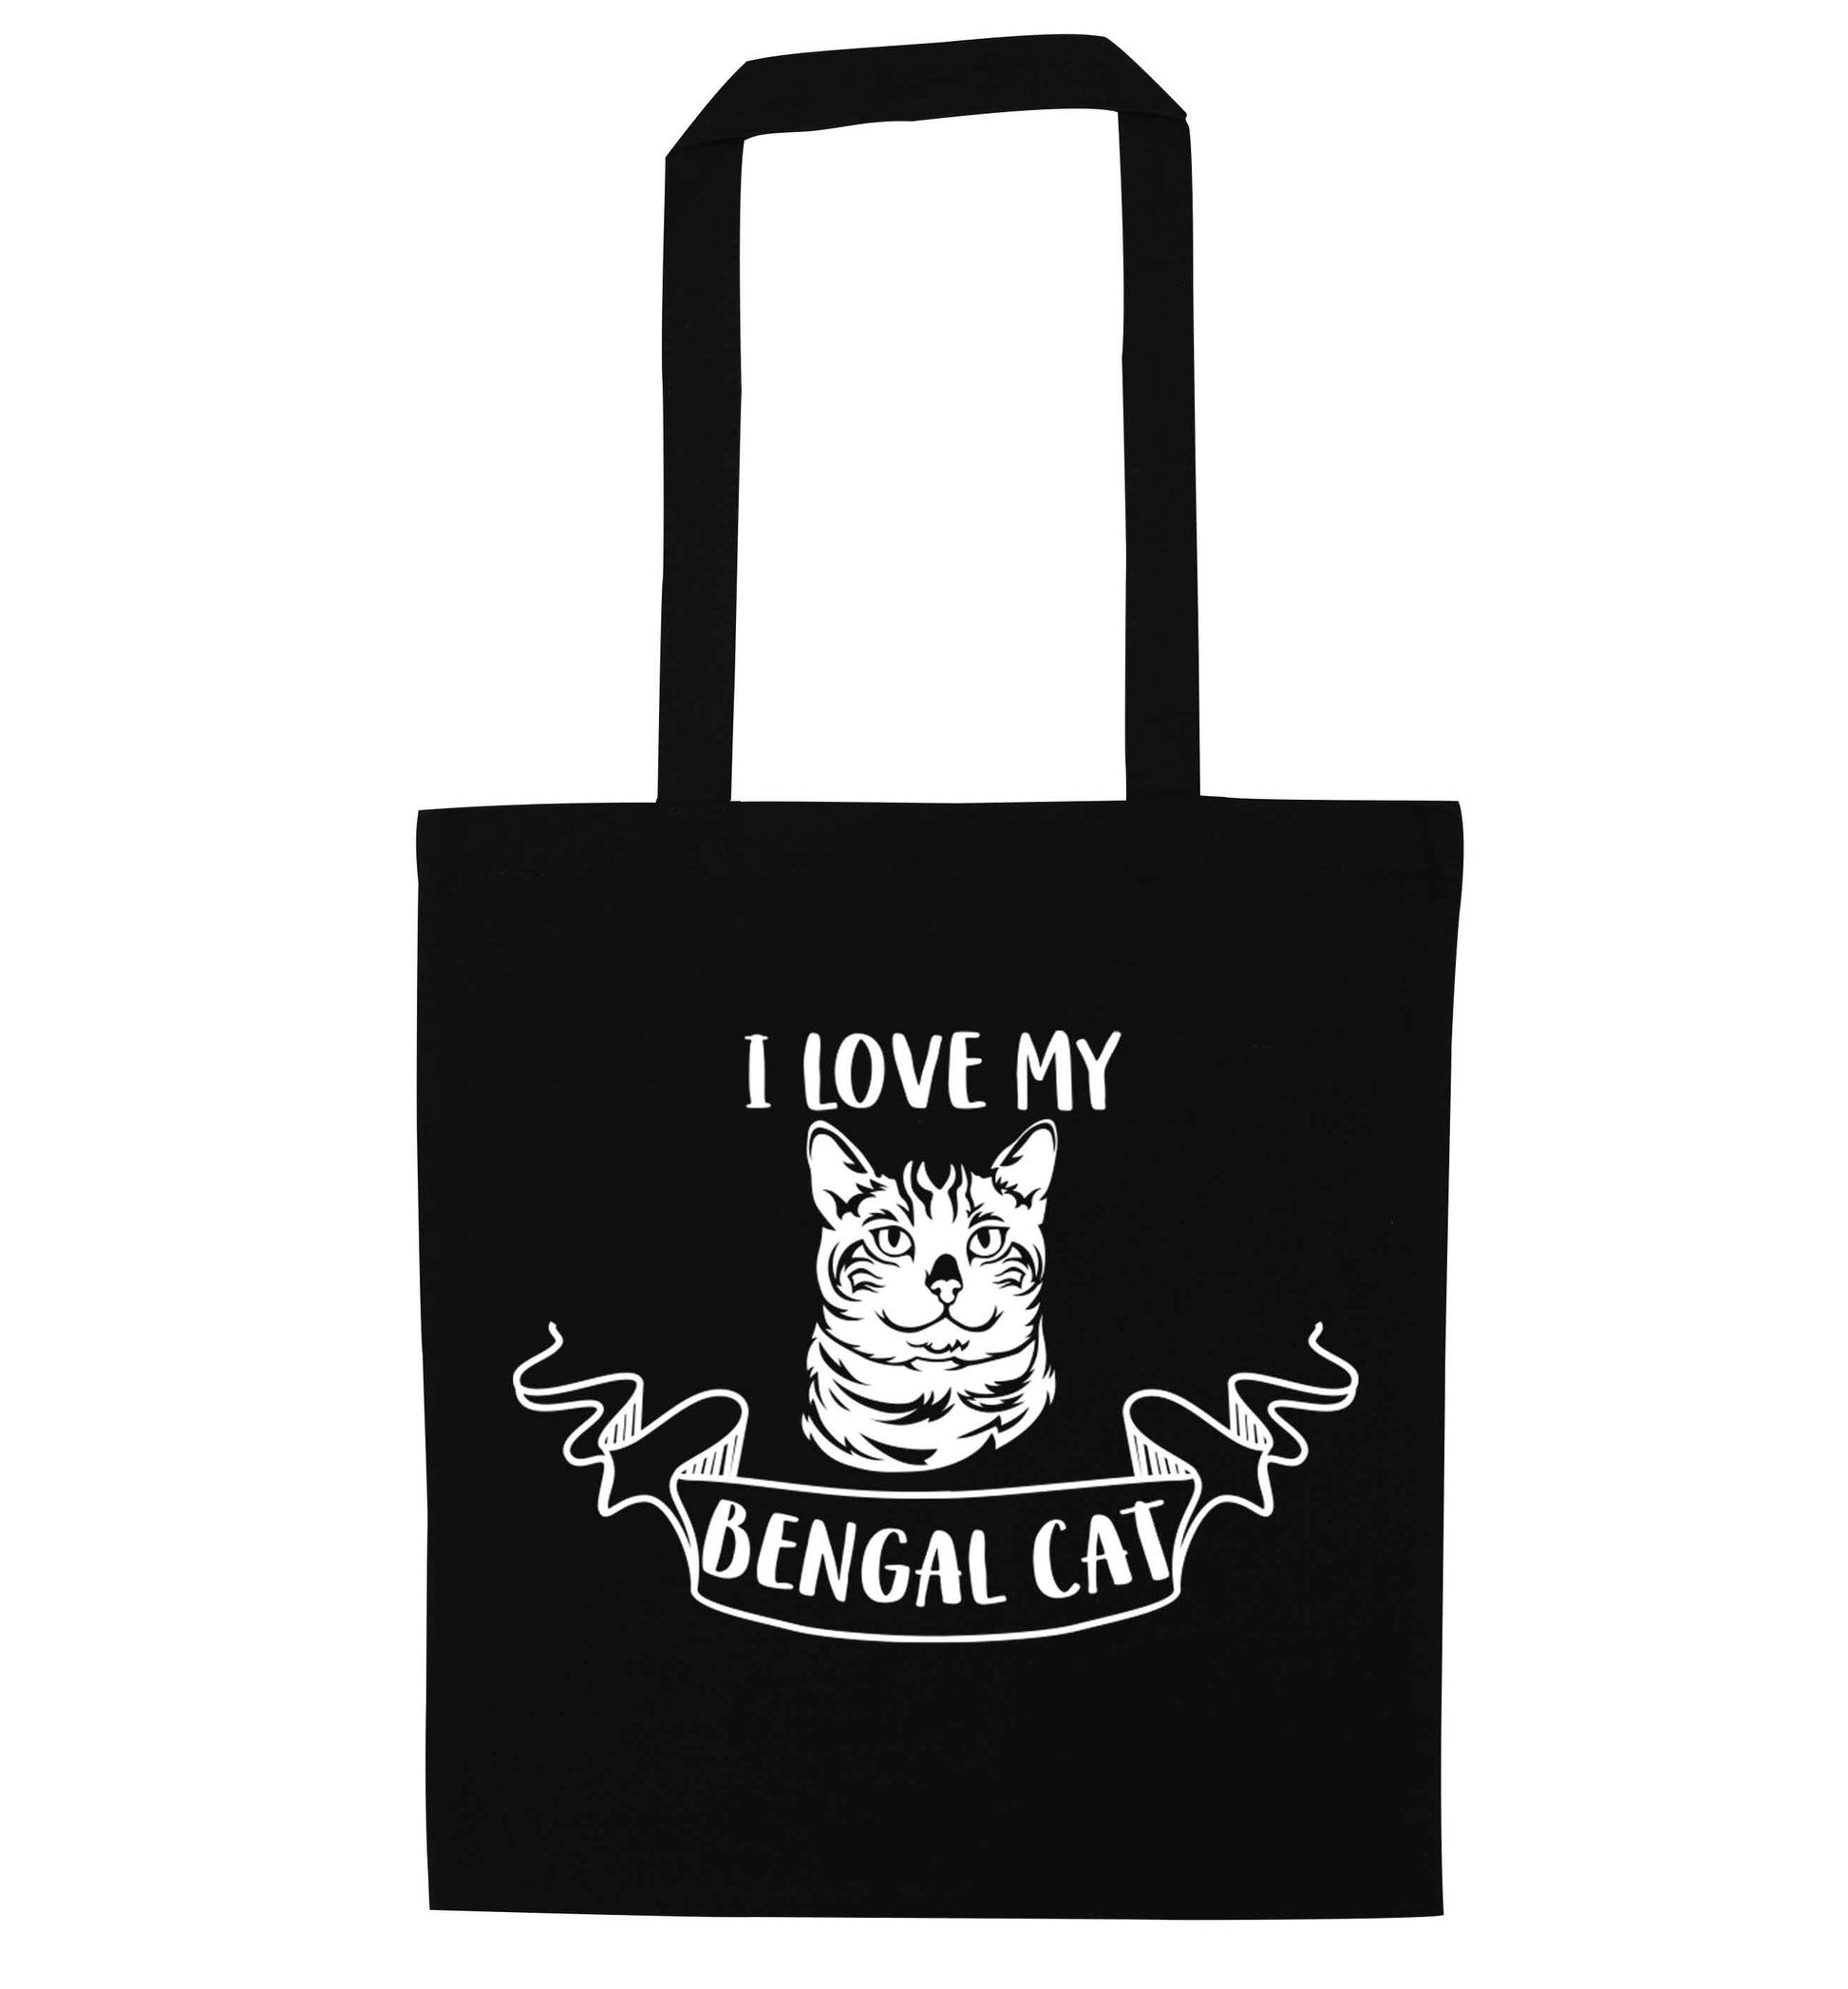 I love my begnal cat black tote bag